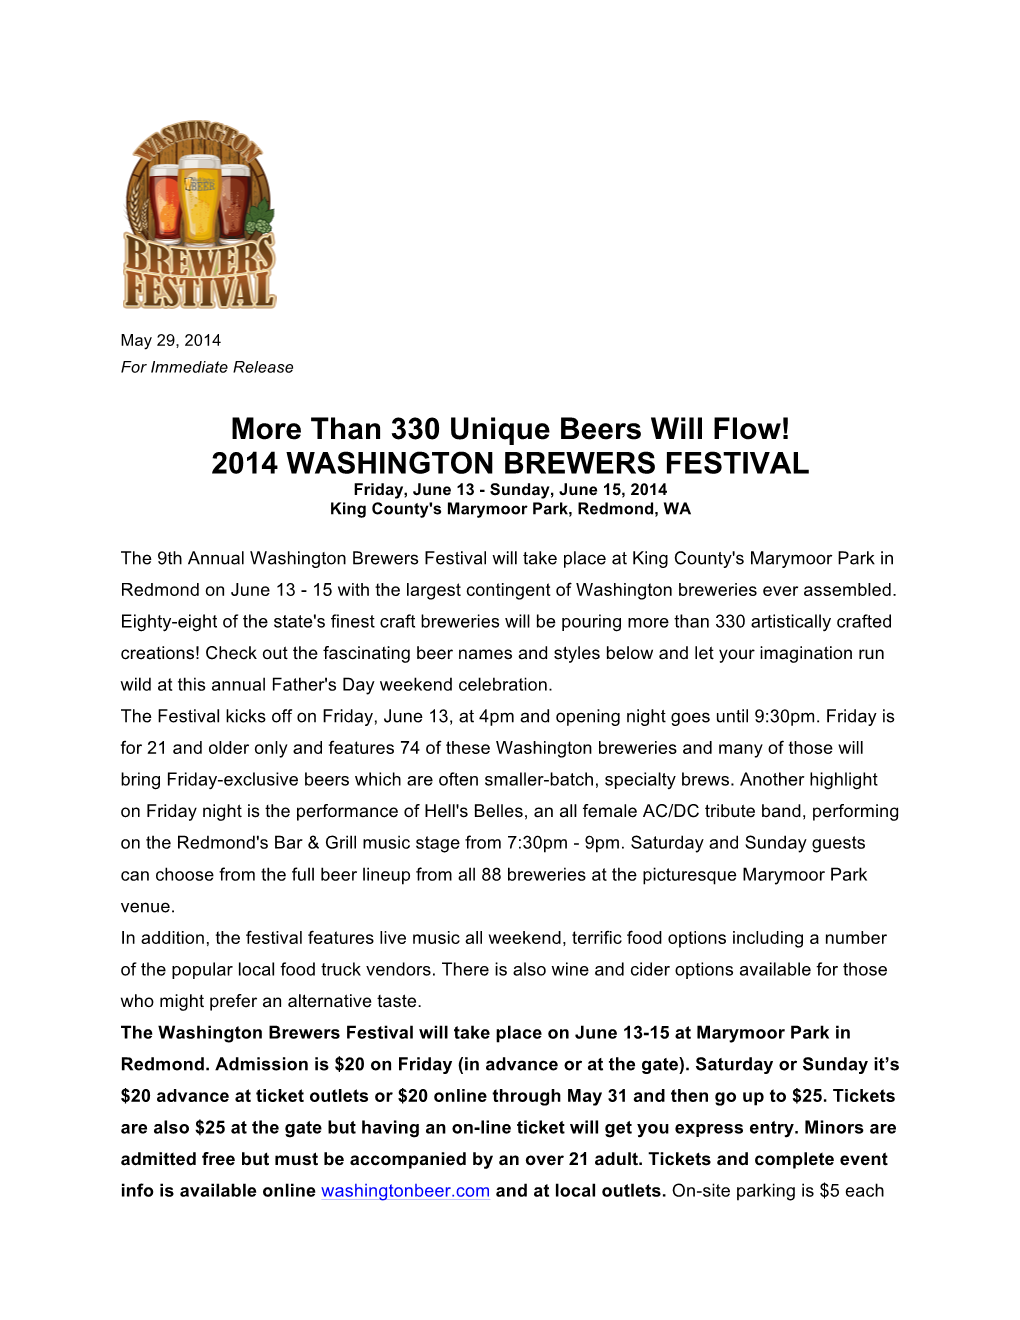 WBF Beer List Release